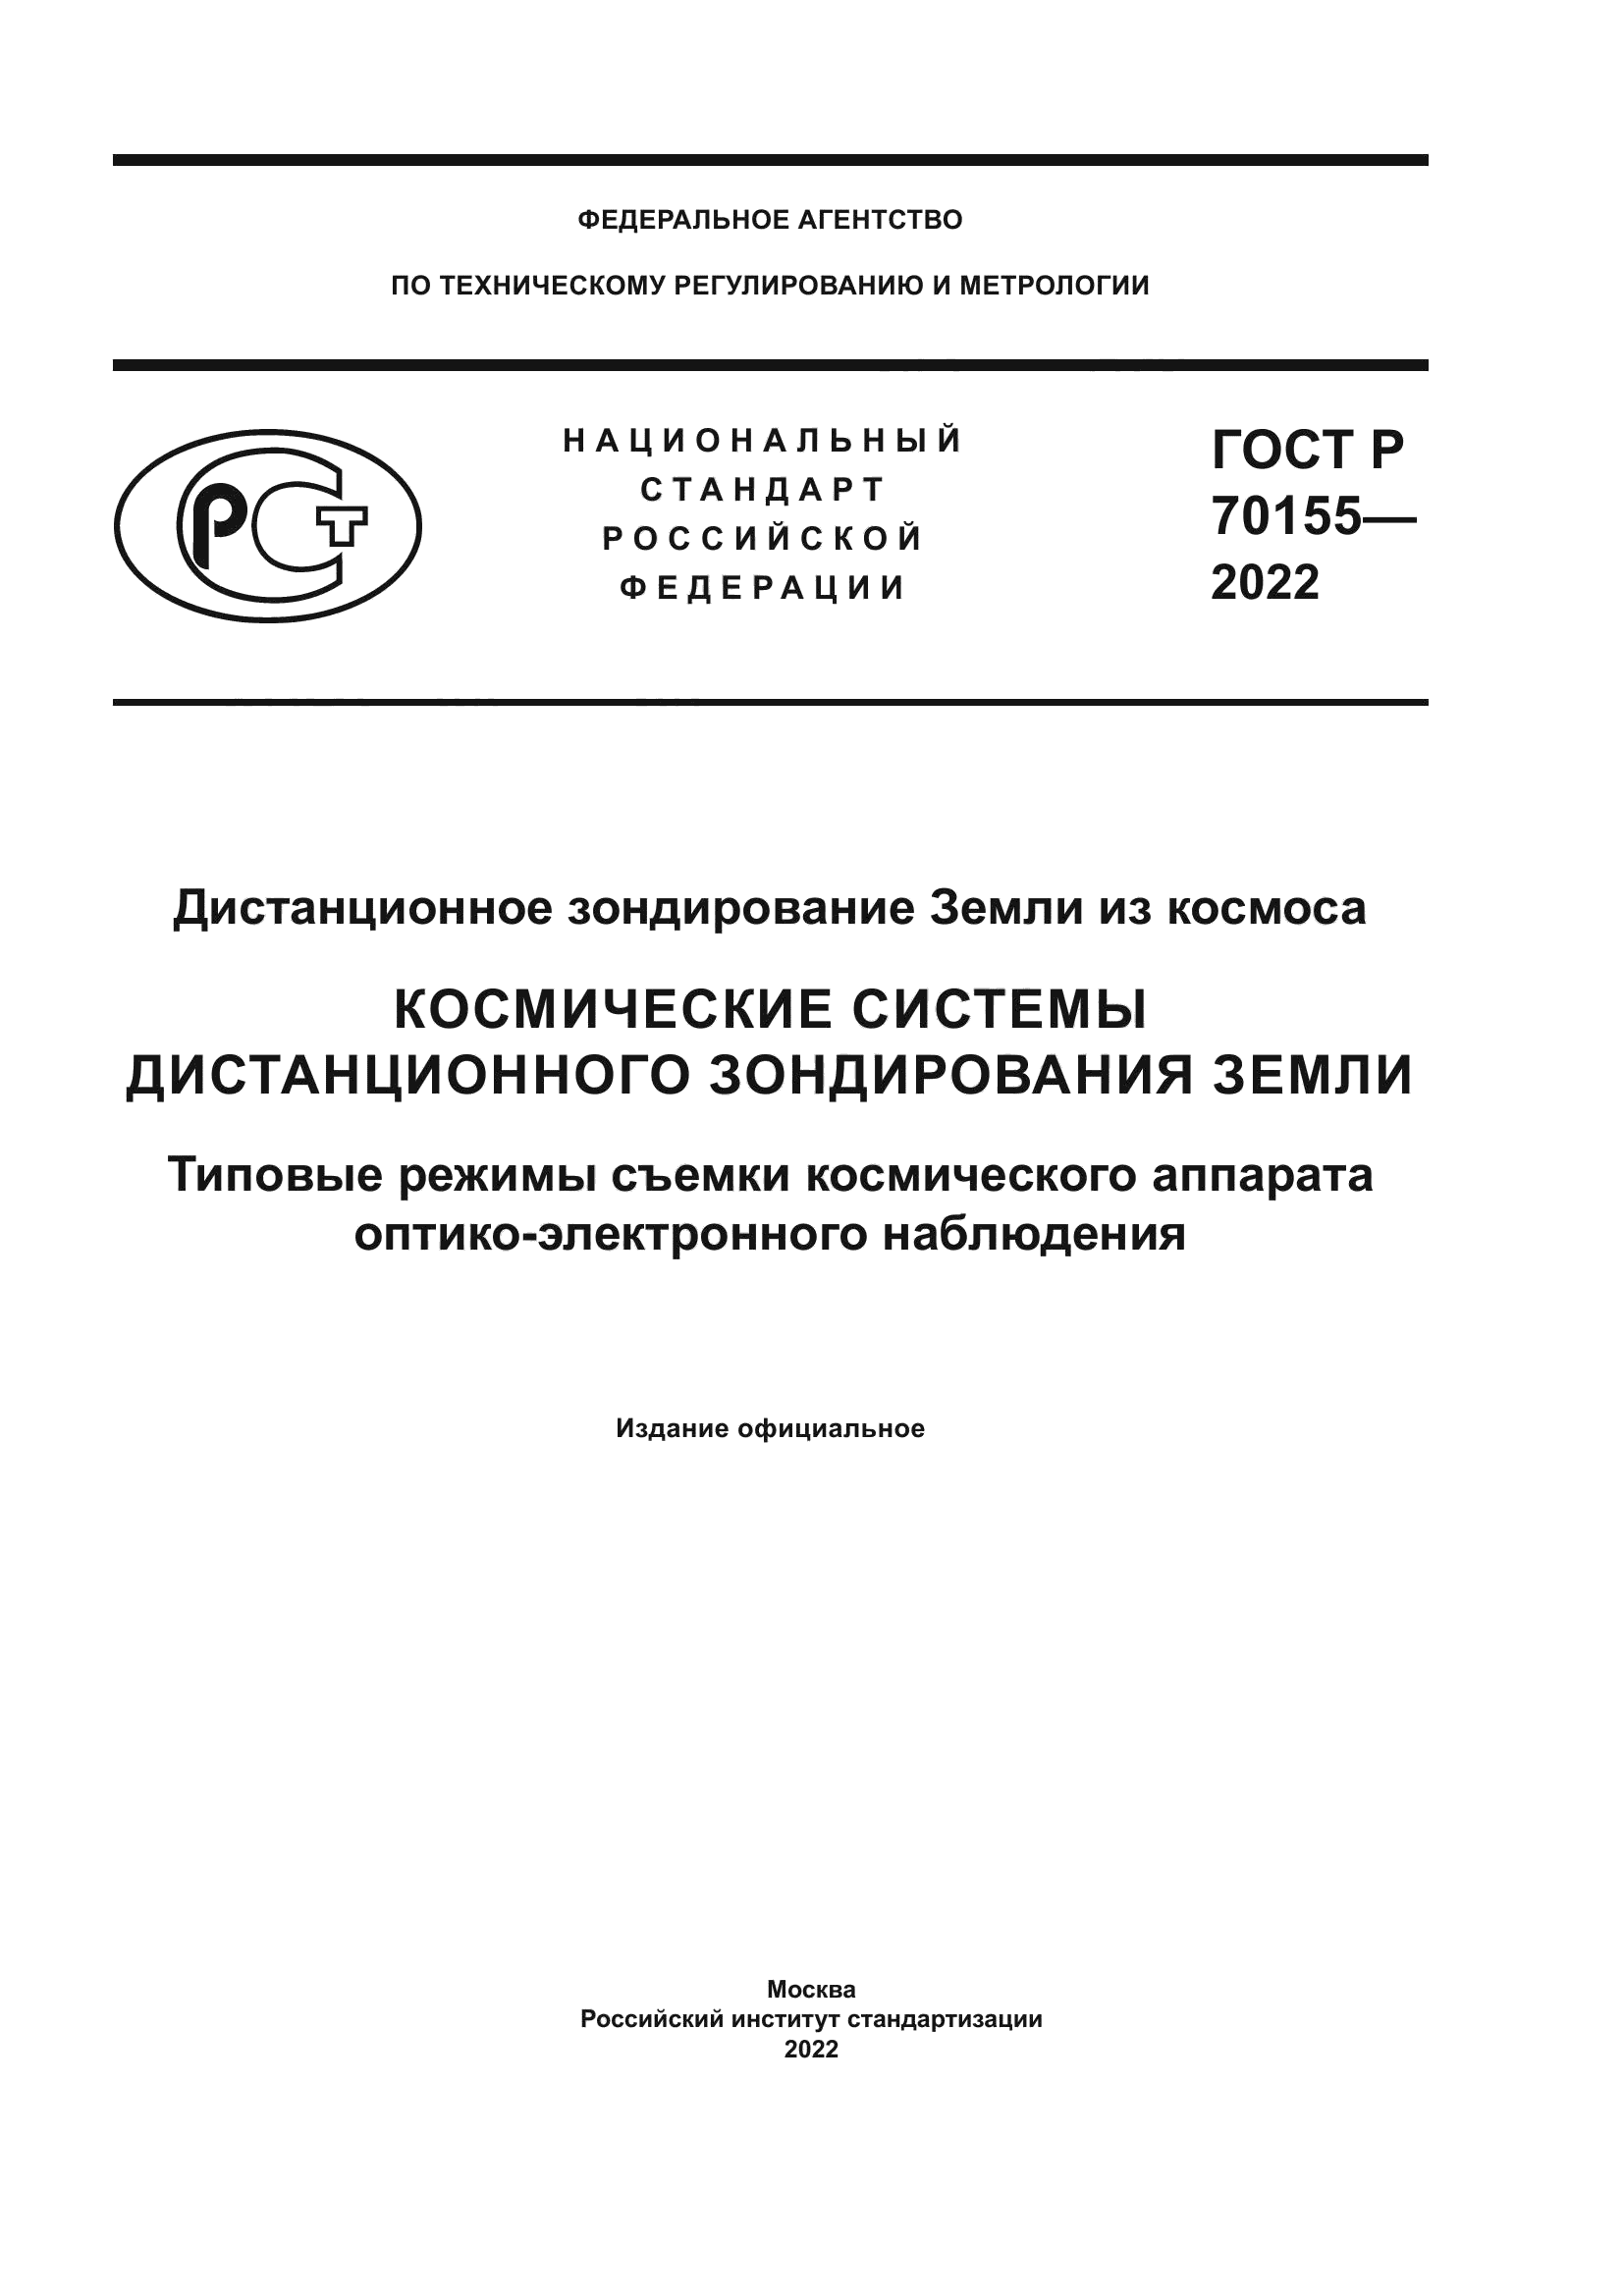 ГОСТ Р 70155-2022